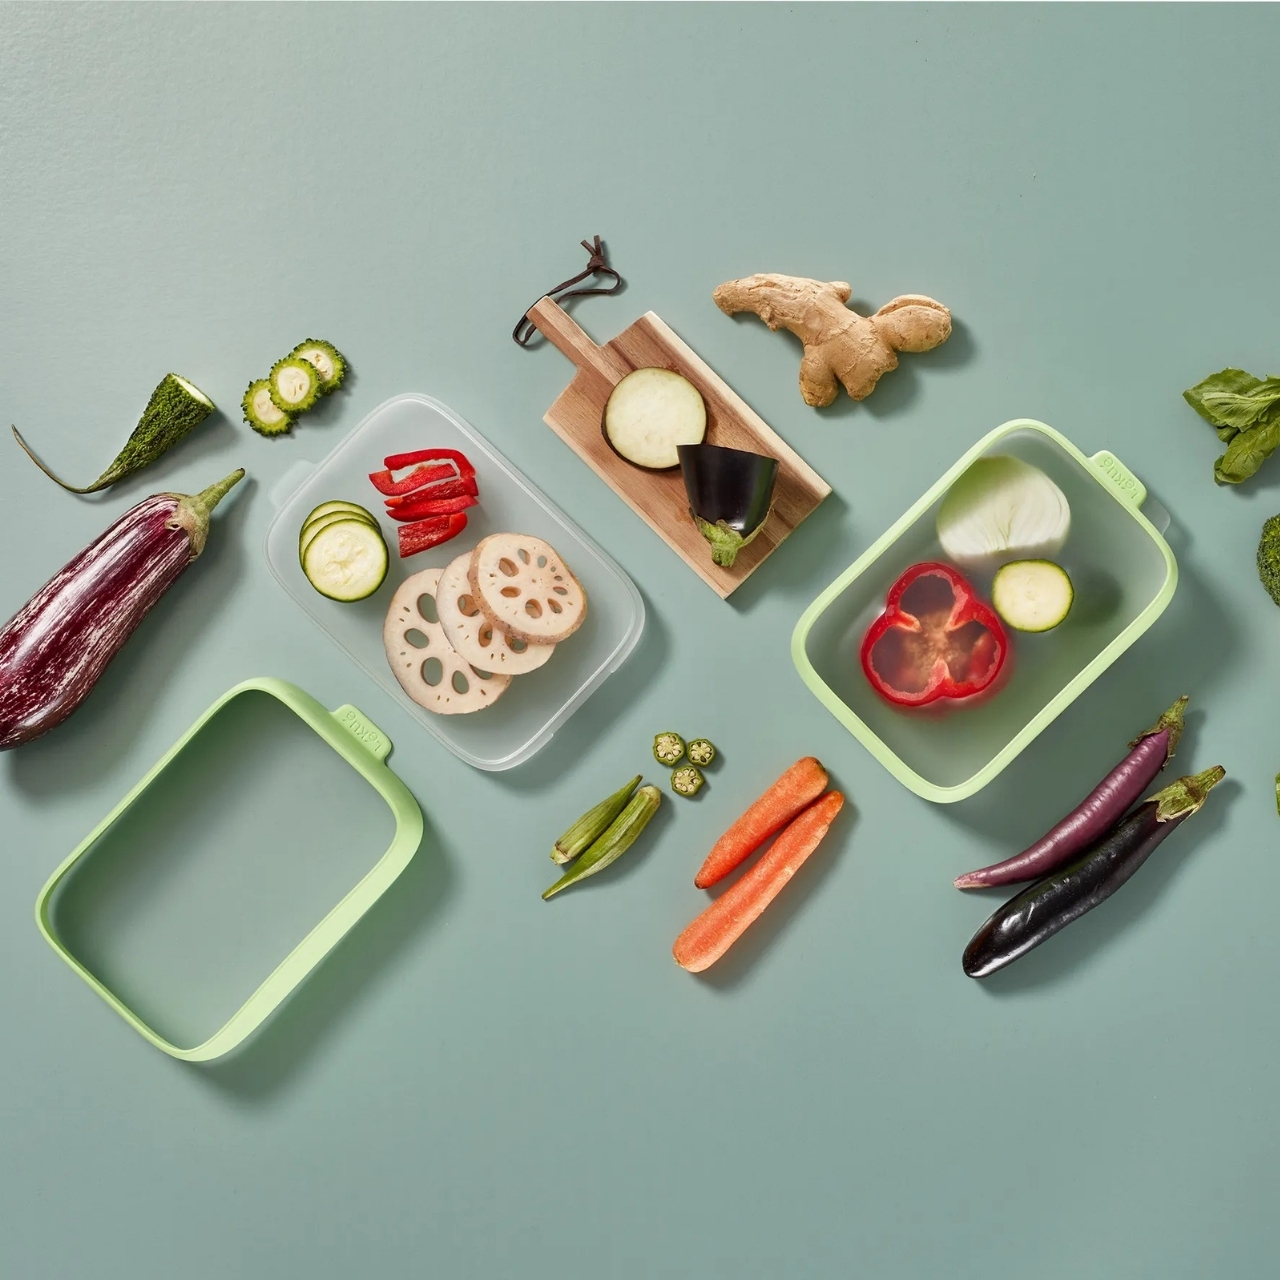 https://www.yankodesign.com/images/design_news/2022/07/reusable-seal-tray-helps-keep-veggies-fresh-and-reduce-single-use-plastic/2.jpg